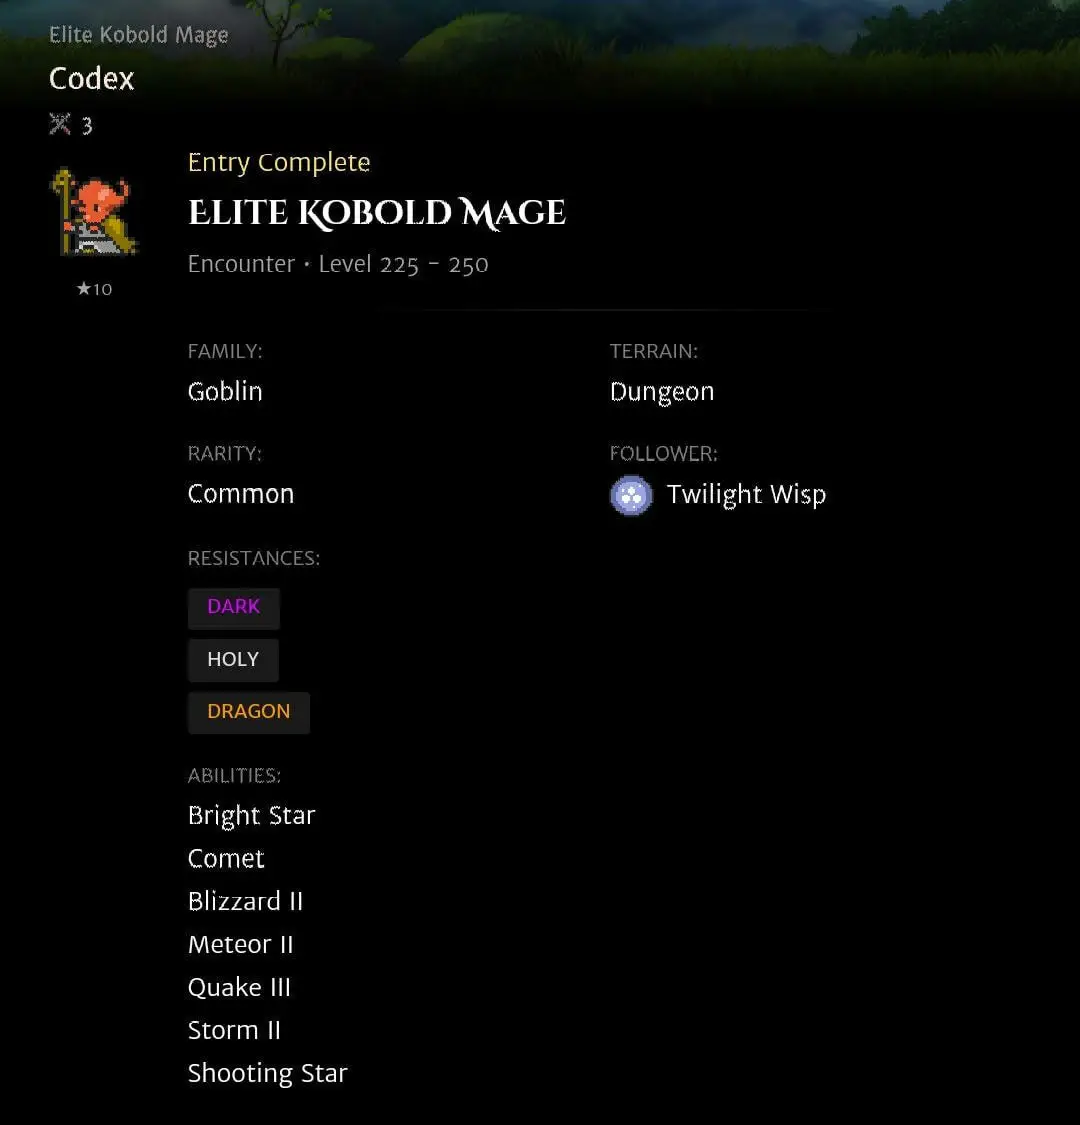 Elite Kobold Mage codex entry